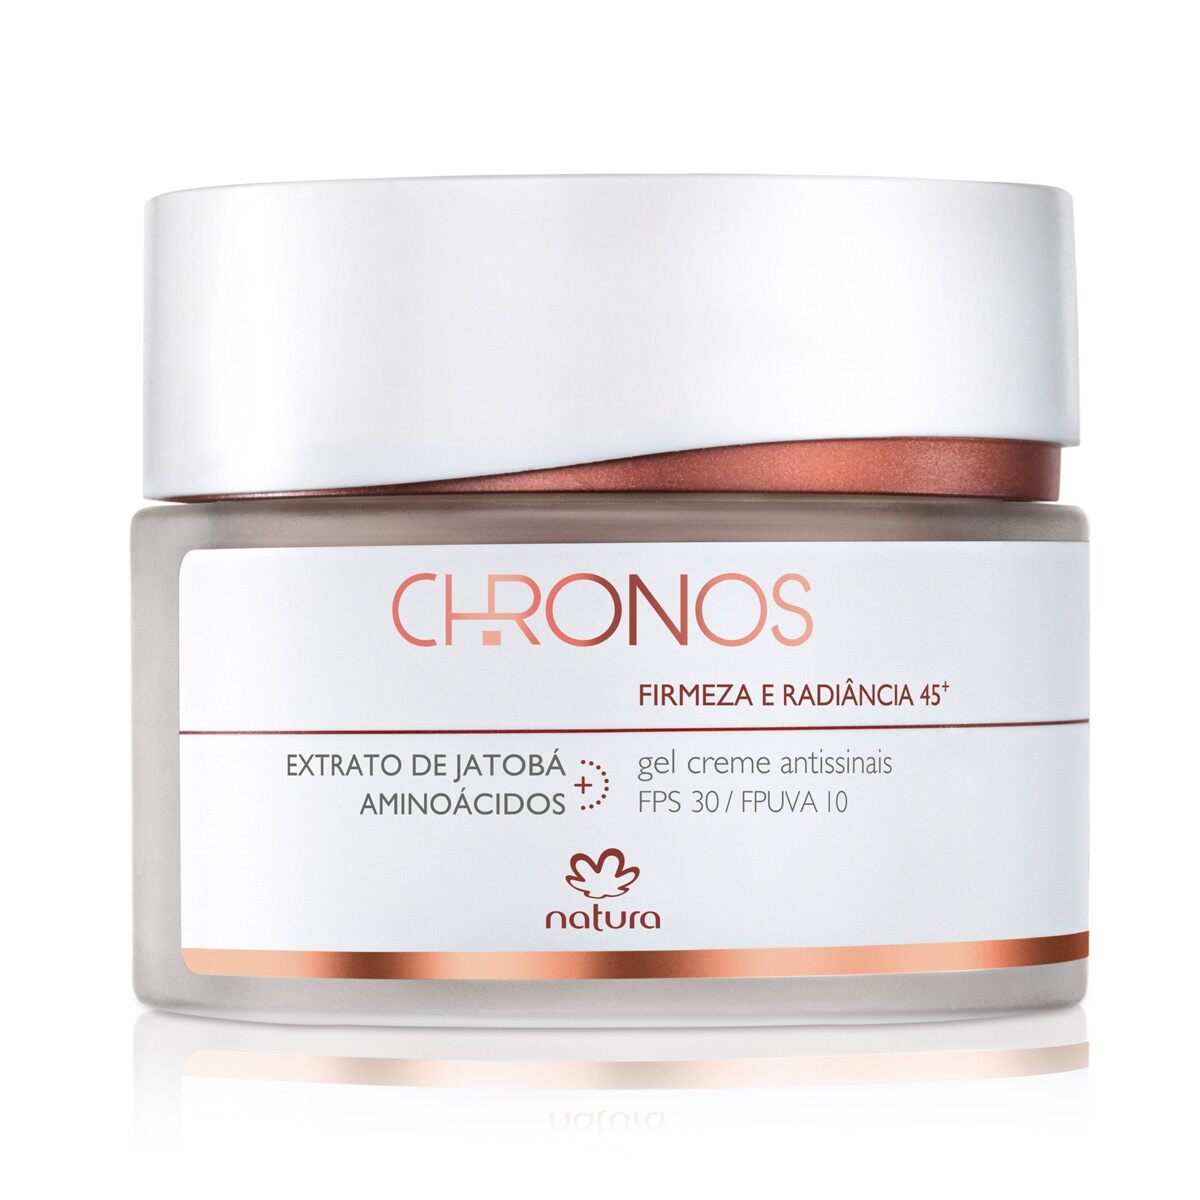 45+ Dia Firmeza e Radiância Chronos Anti-aging Cream - 40g